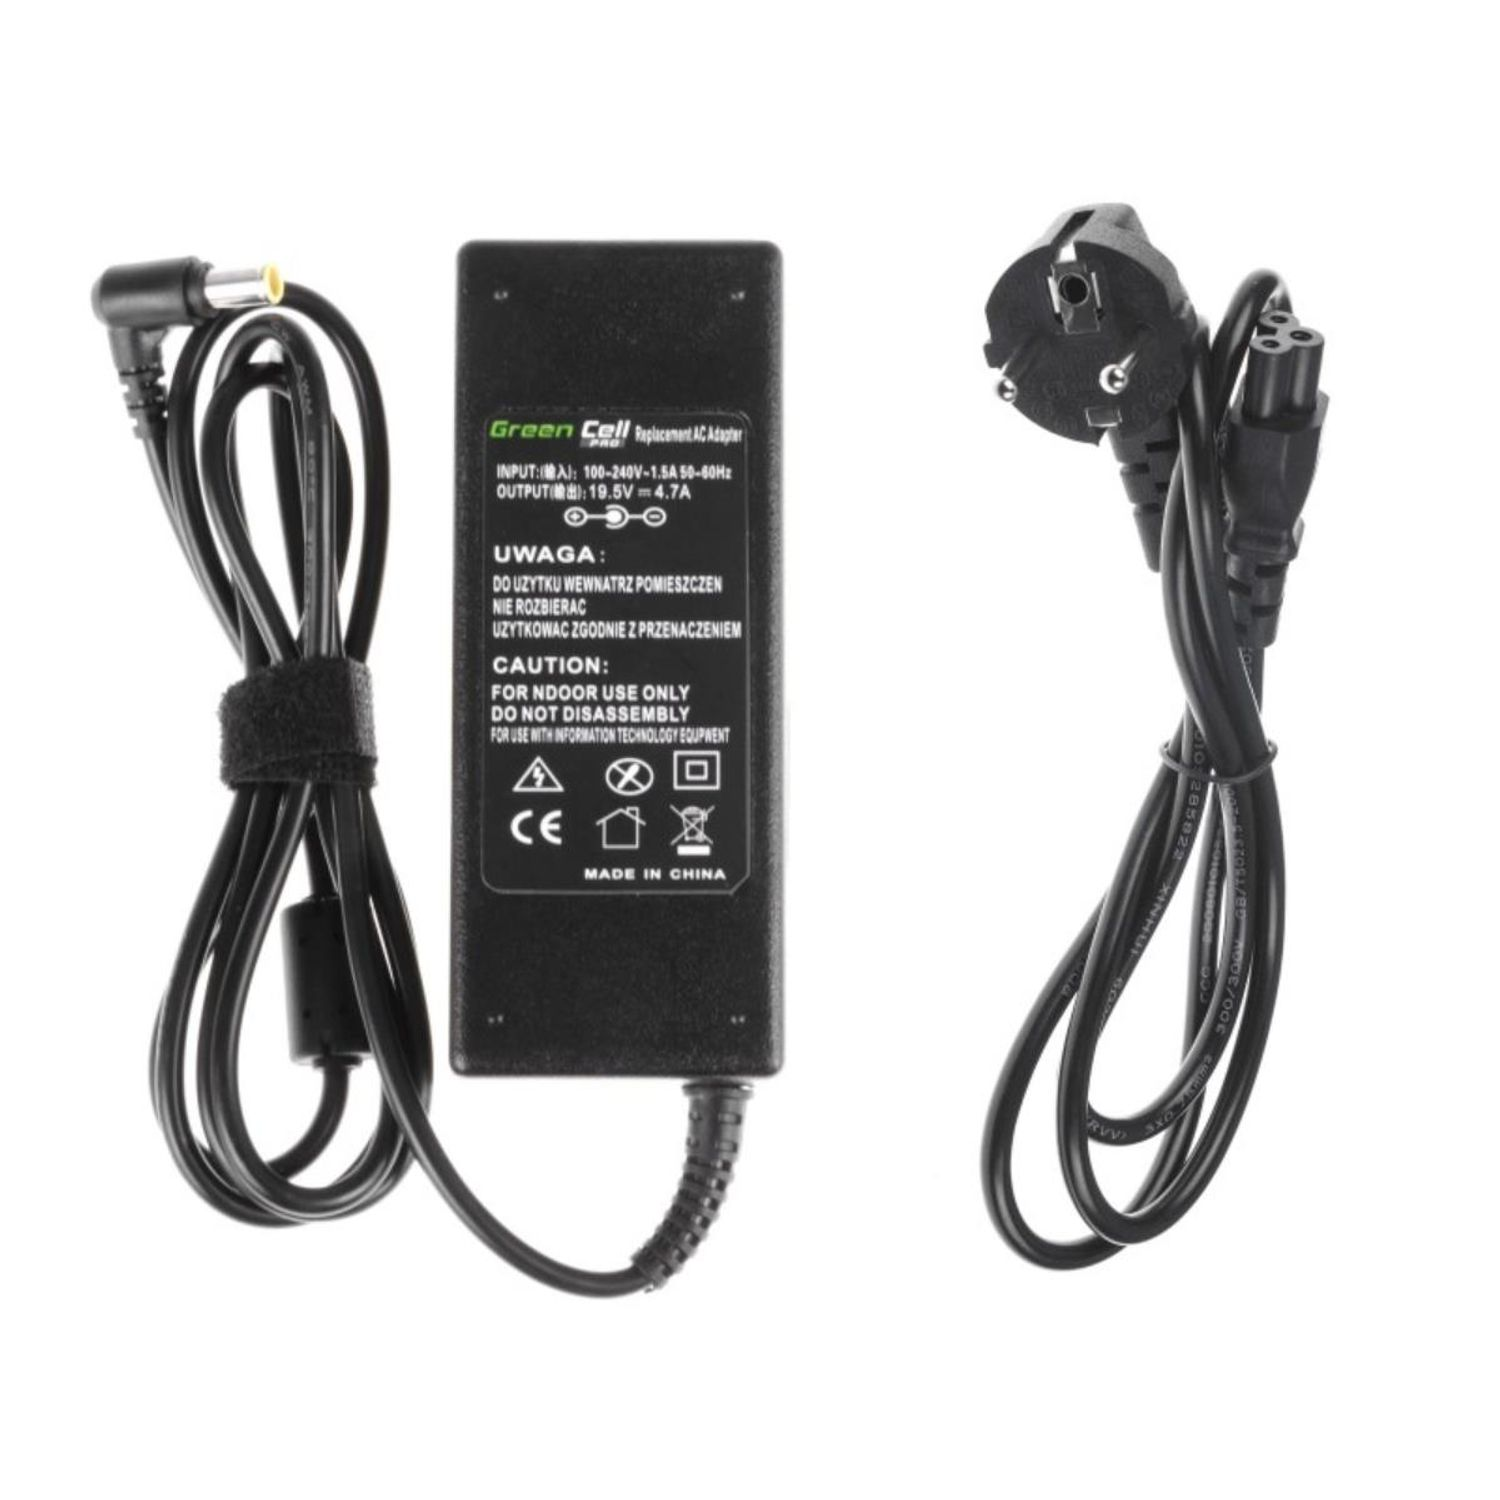 Ladegerät Sony PCG-61211M für CELL Ladegeräte schwarz Cell Green 90W GREEN PRO Universal,